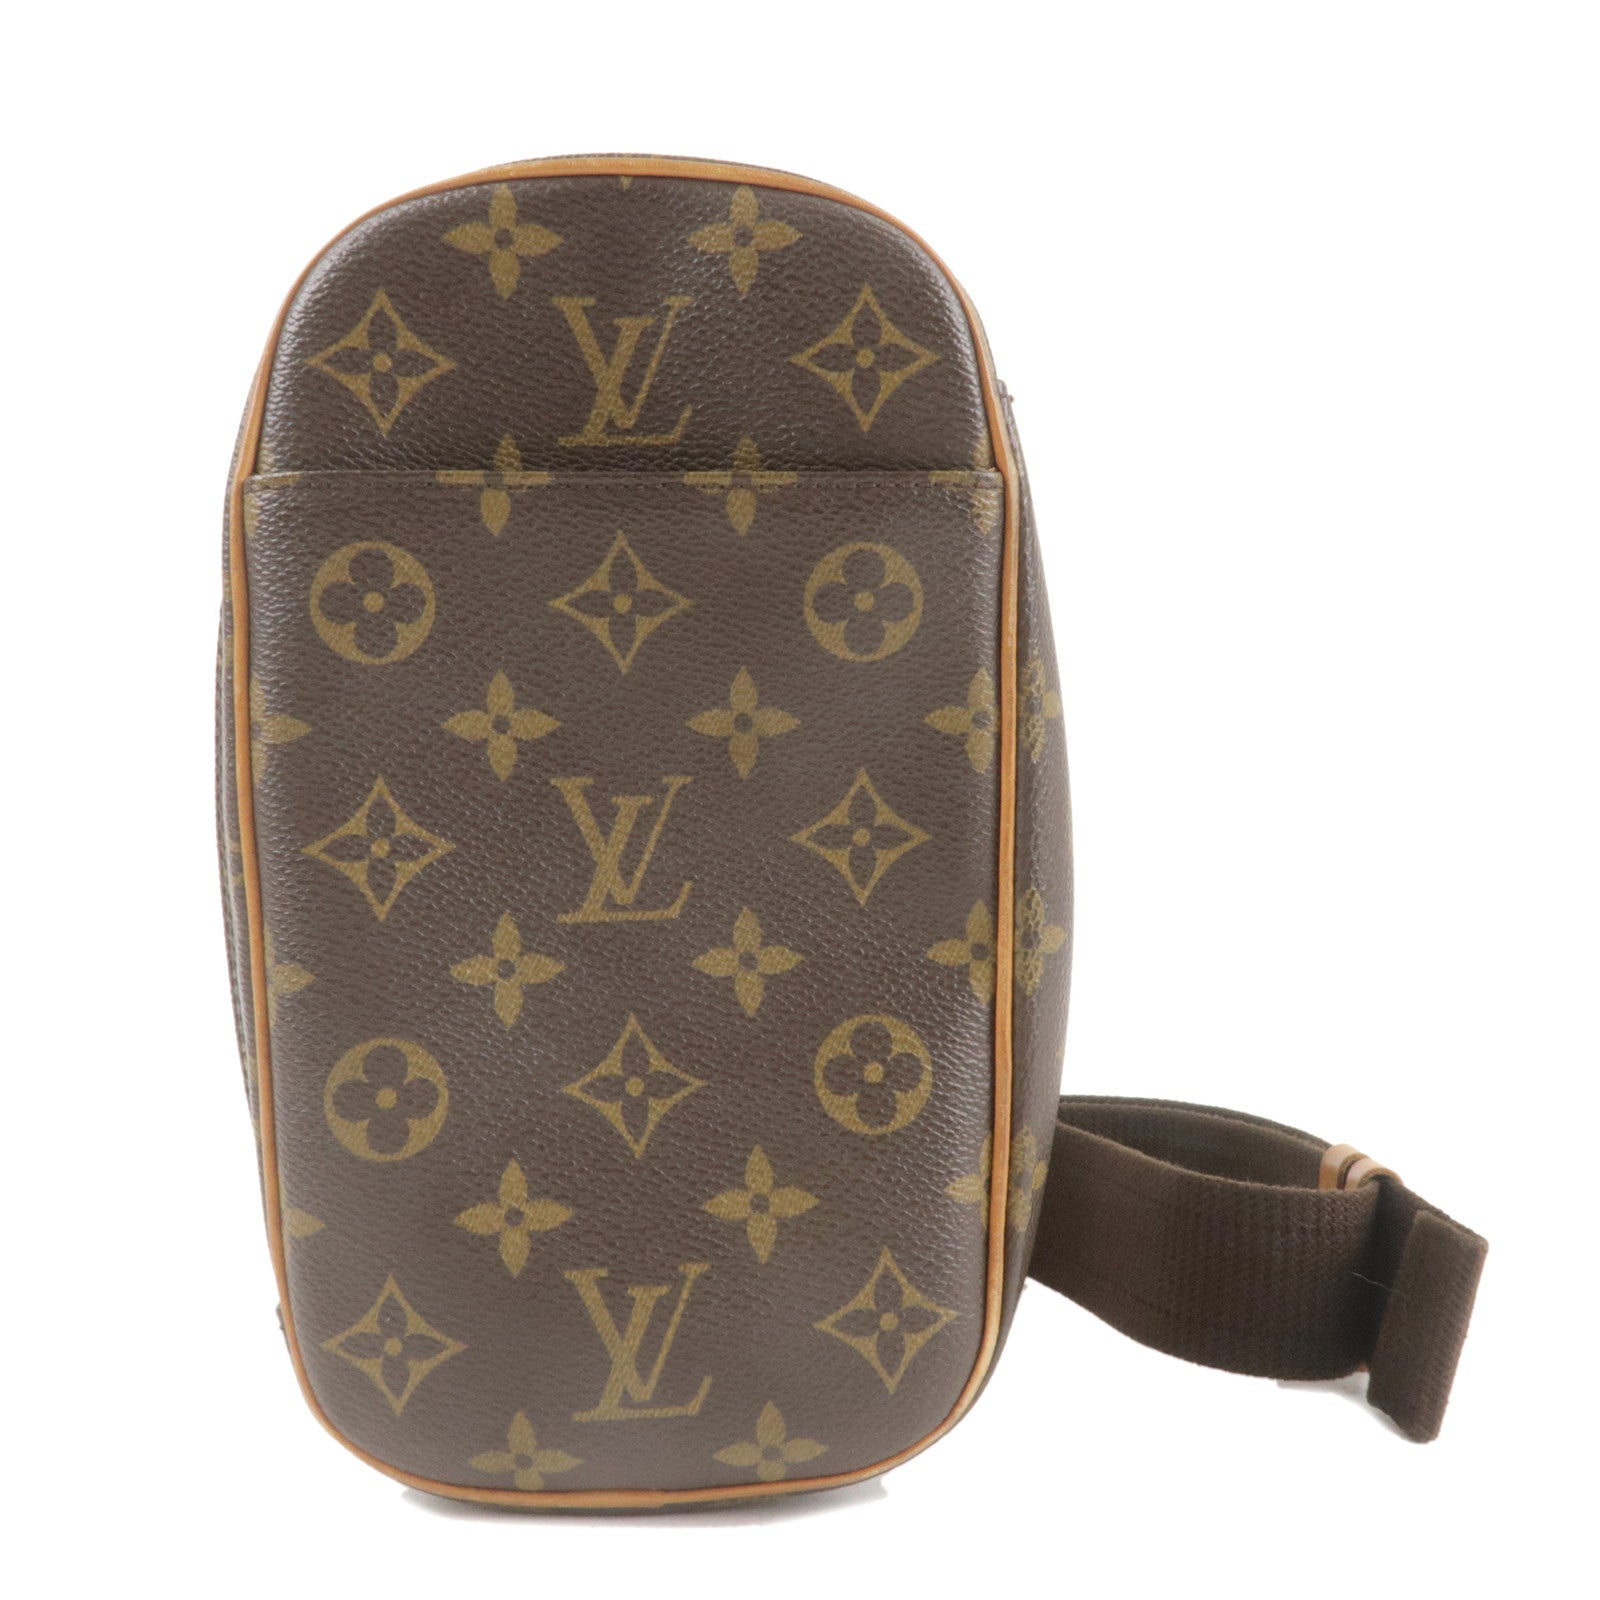 Louis Vuitton Monogram Canvas Pochette Cross Body Bag Handbag